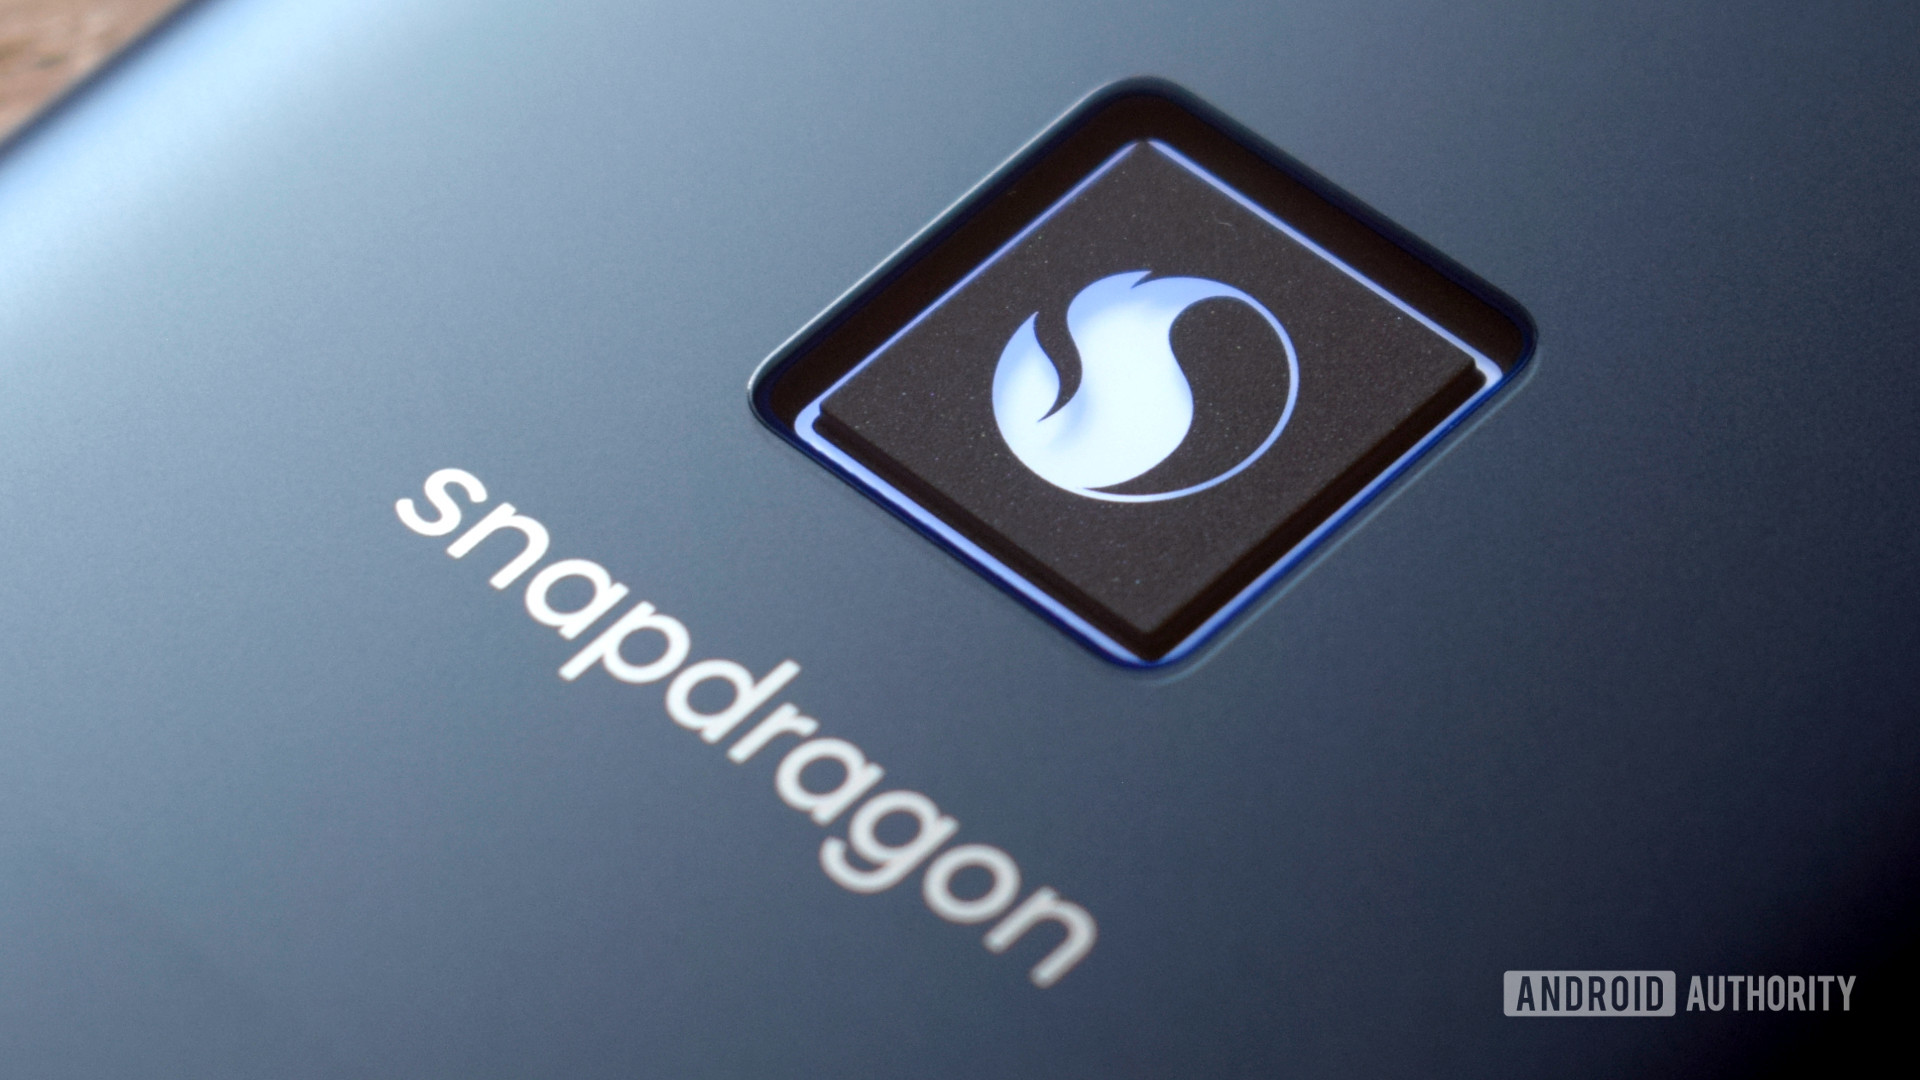 Smartphone for Snapdragon Insiders logo light up closer